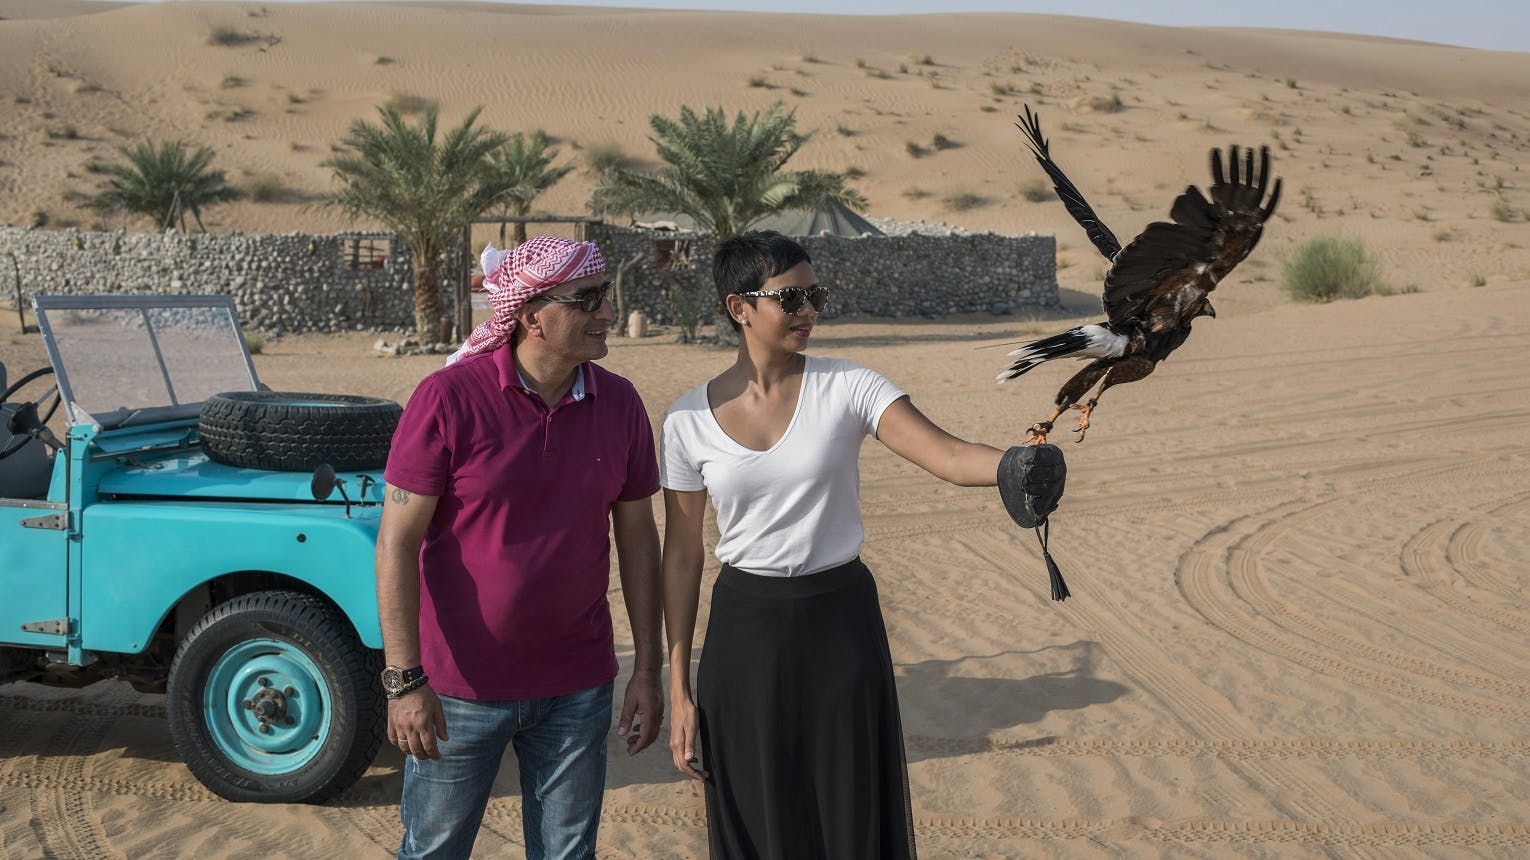 Dubai falconry experience and nature safari with breakfast